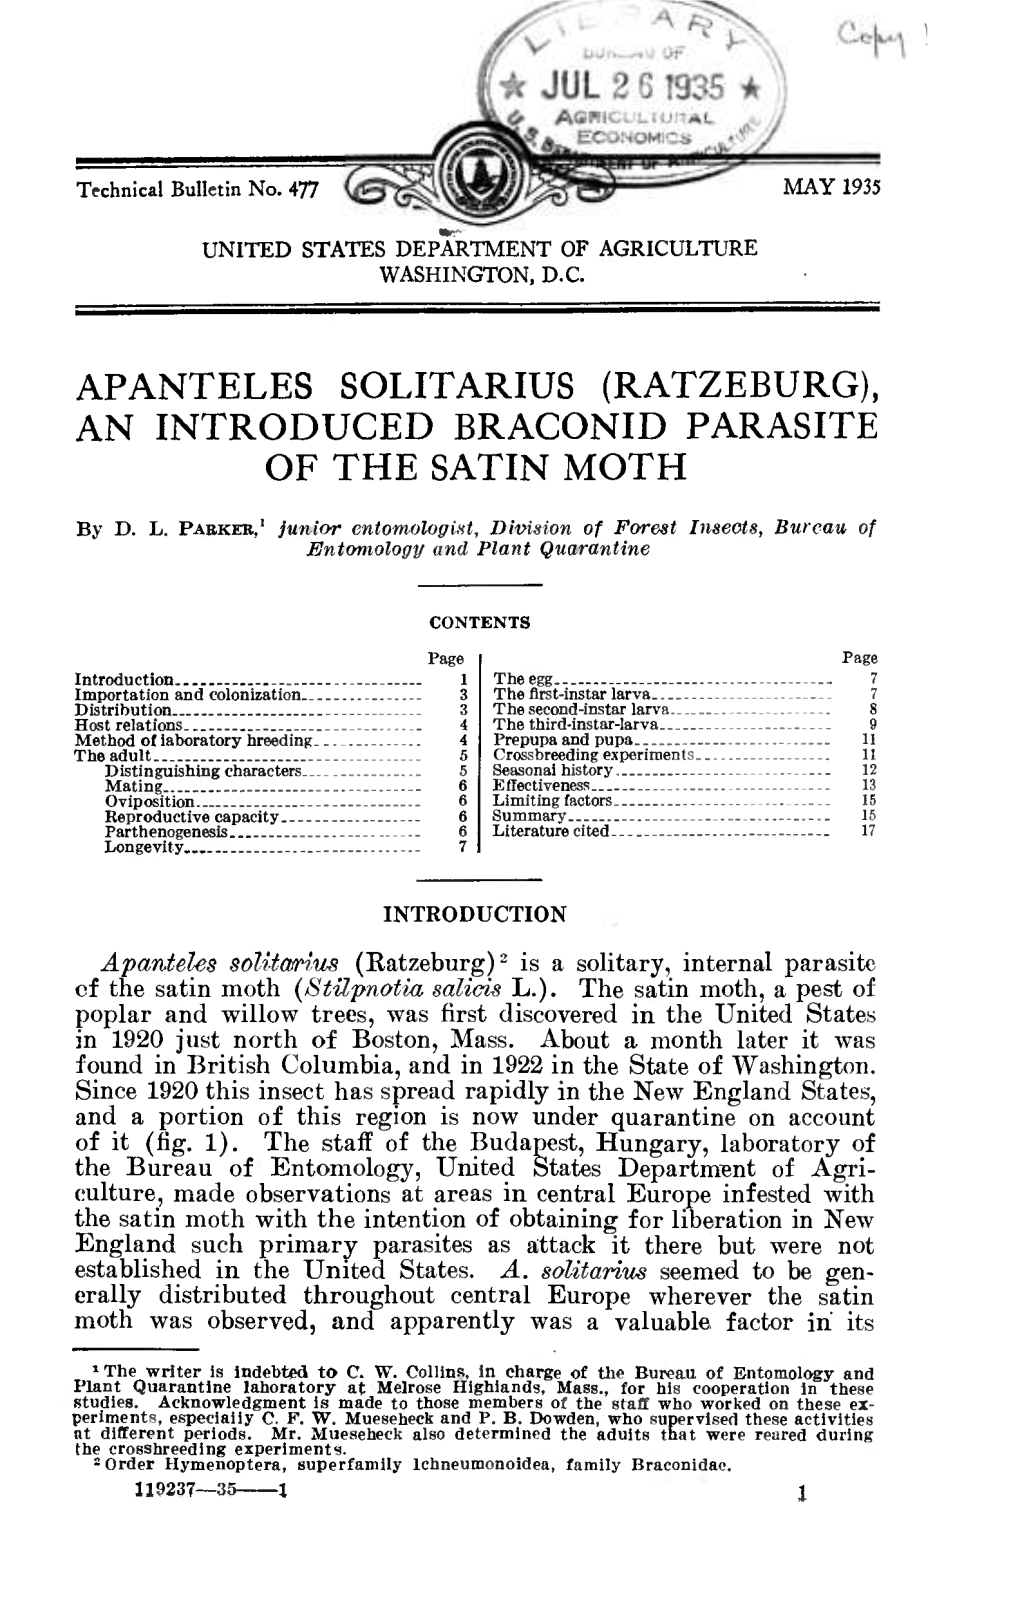 Apanteles Solitarius (Ratzeburg), an Introduced Braconid Parasite of the Satin Moth